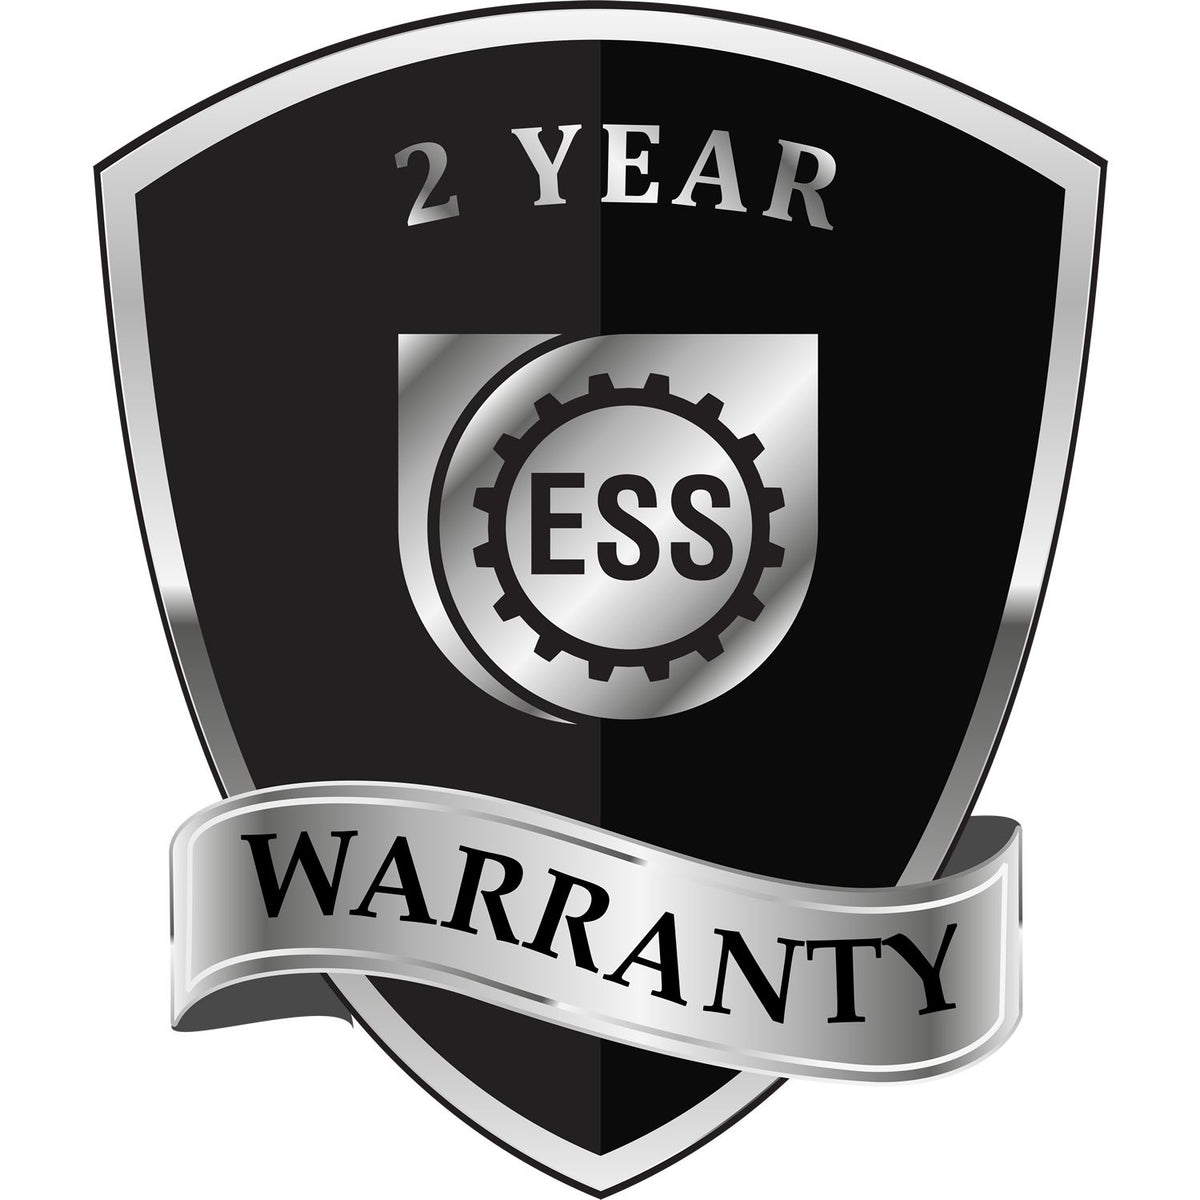 A badge or emblem showing a warranty icon for the Connecticut Desk Surveyor Seal Embosser